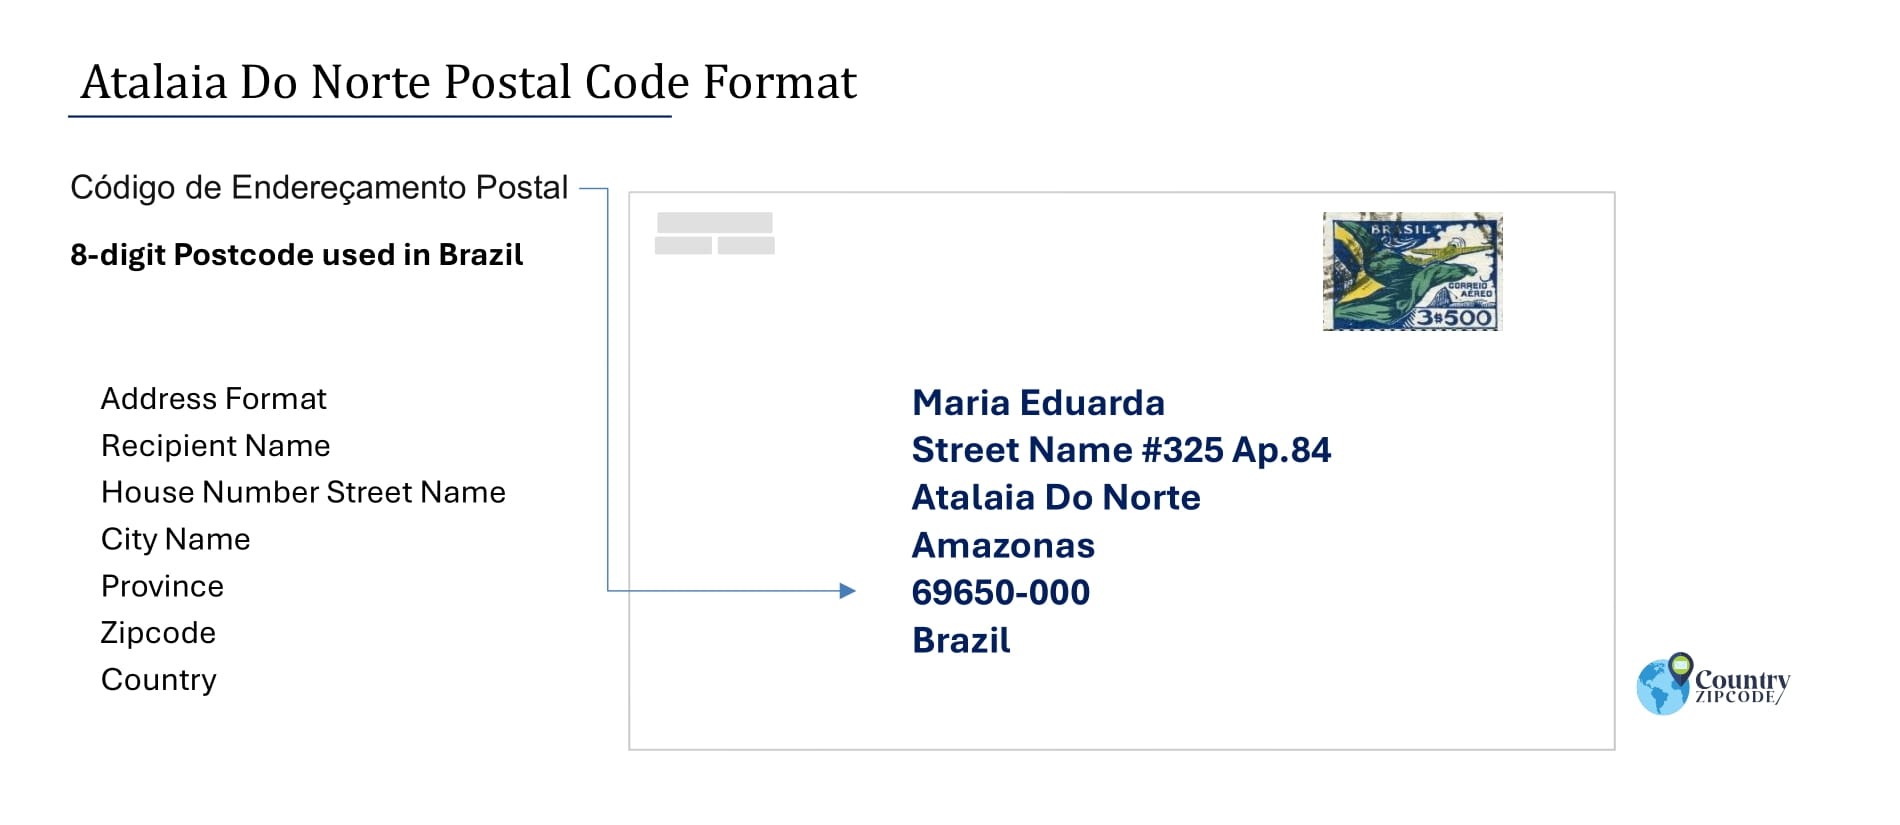 Example of Codigo de Enderecamento Postal and Address format of Atalaia Do Norte Brazil